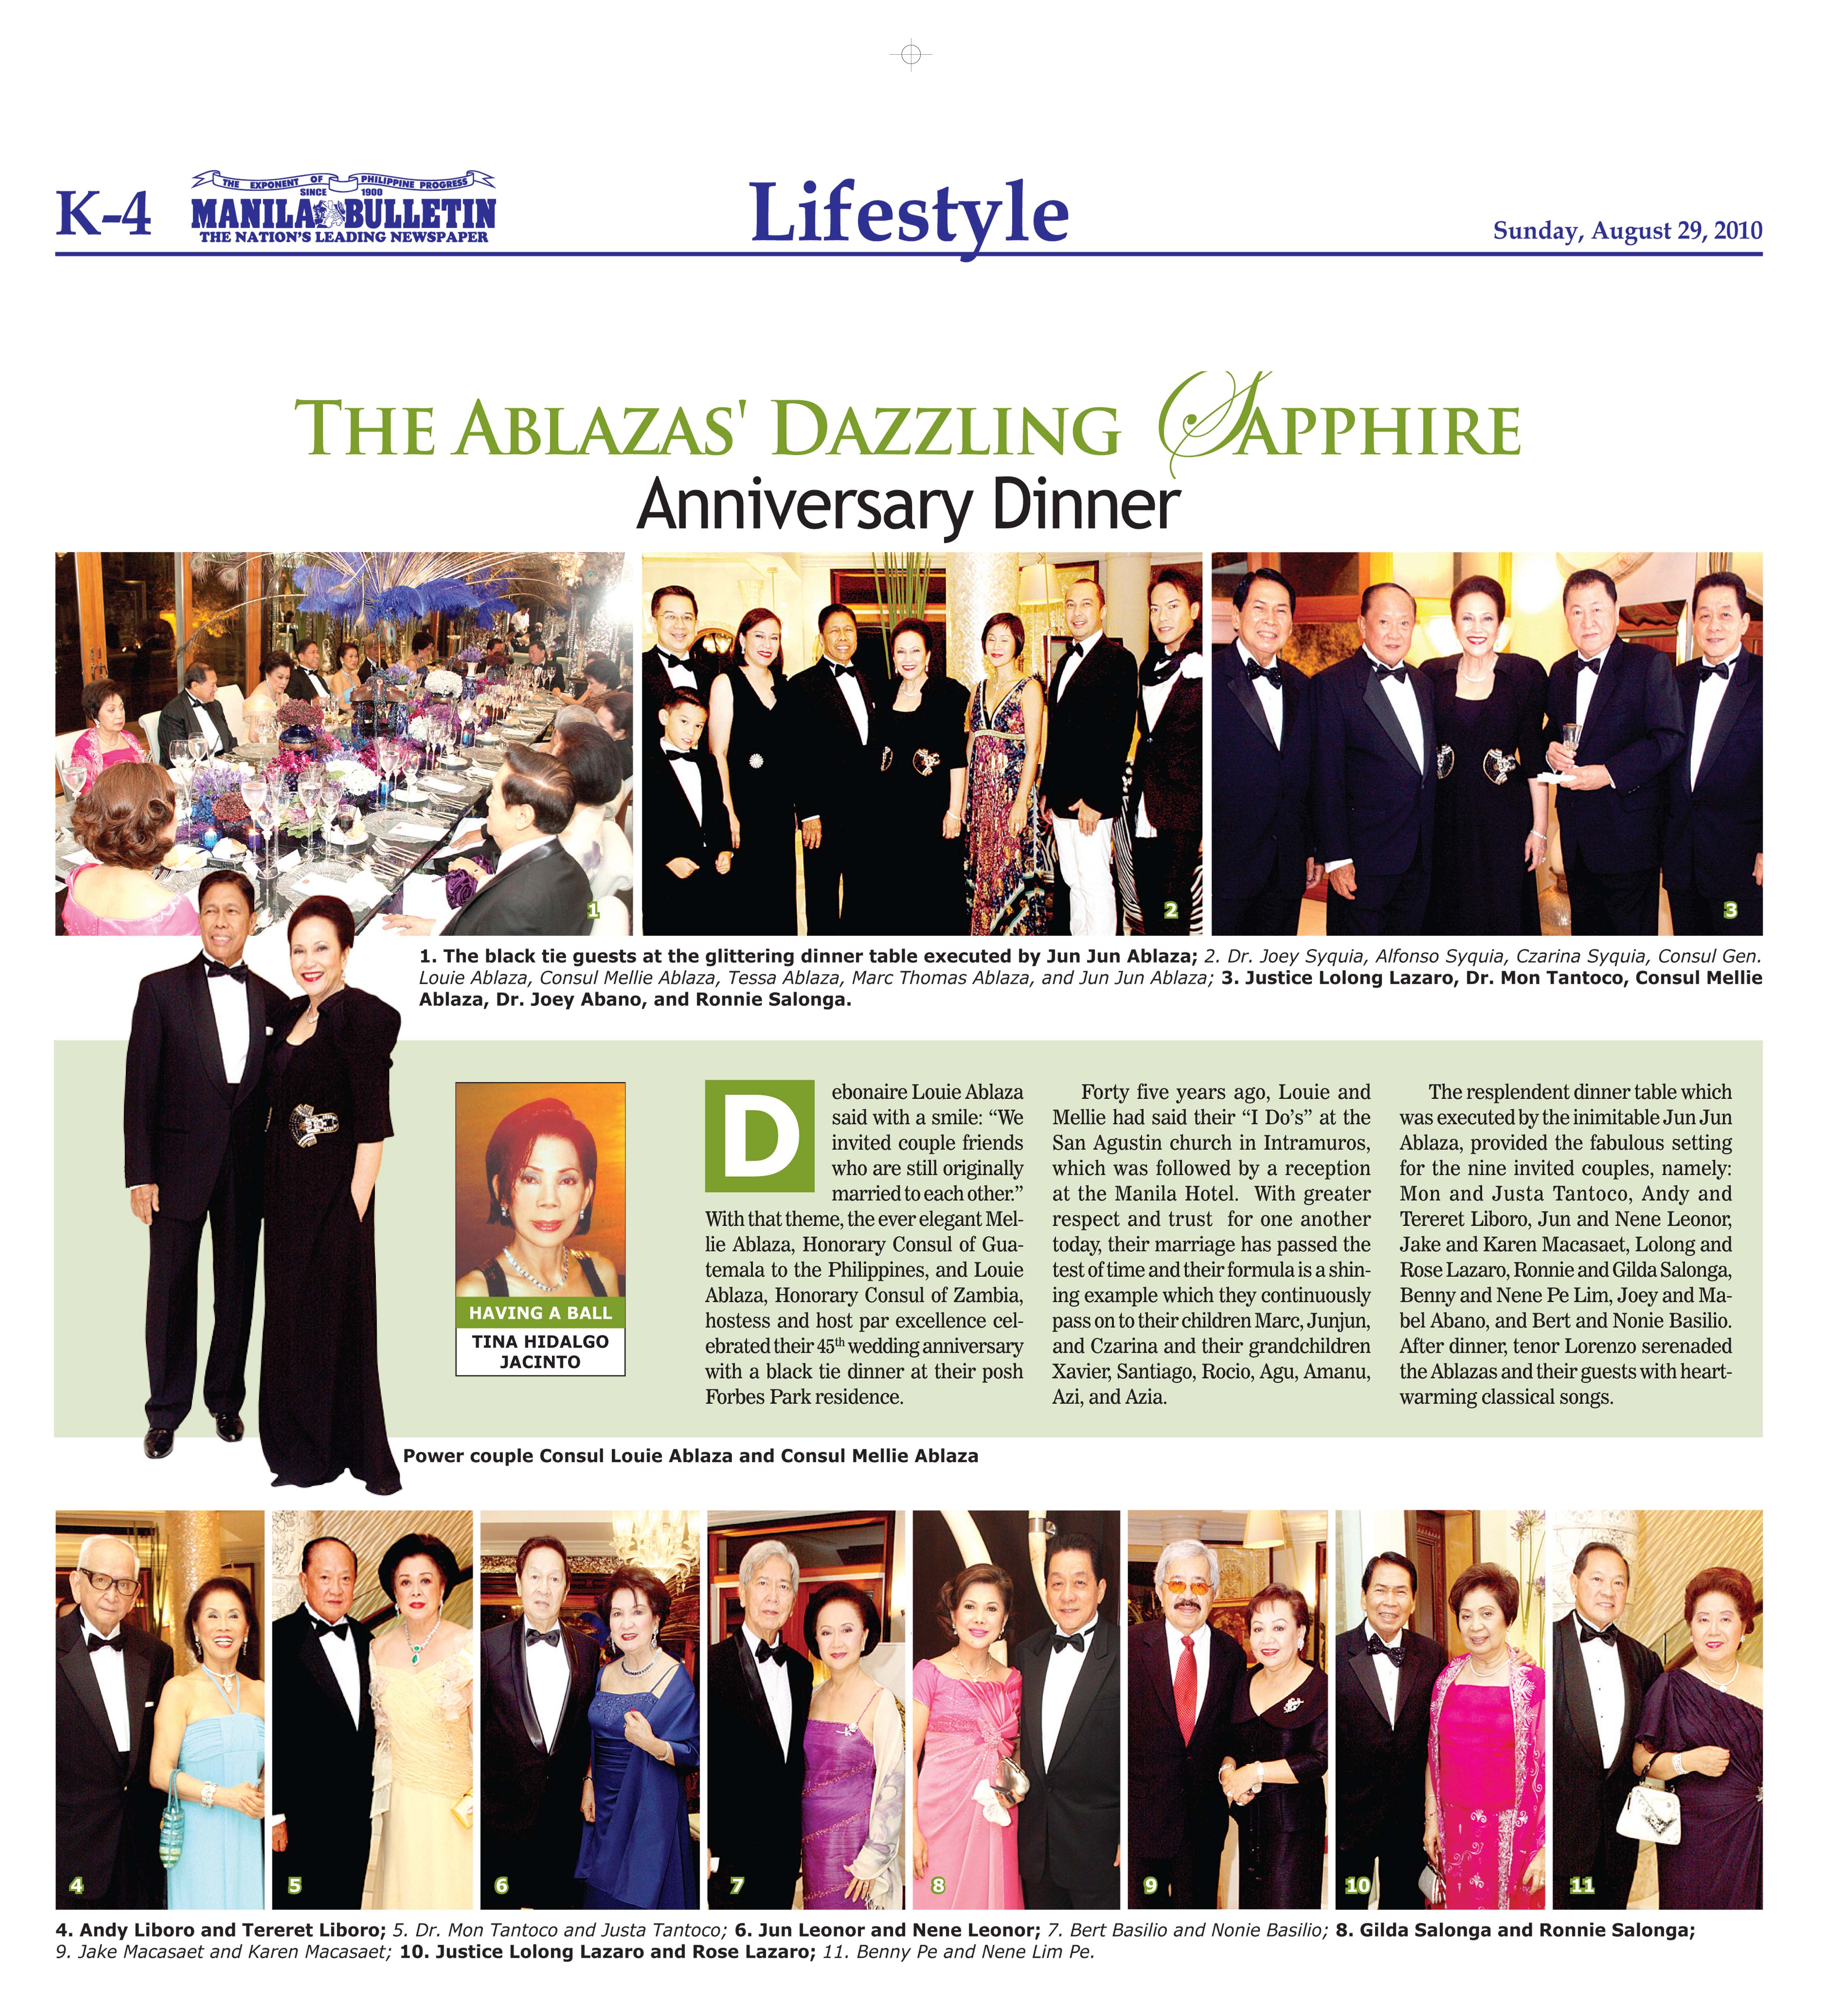 The Ablaza Dazzling Sapphire Anniversary Dinner